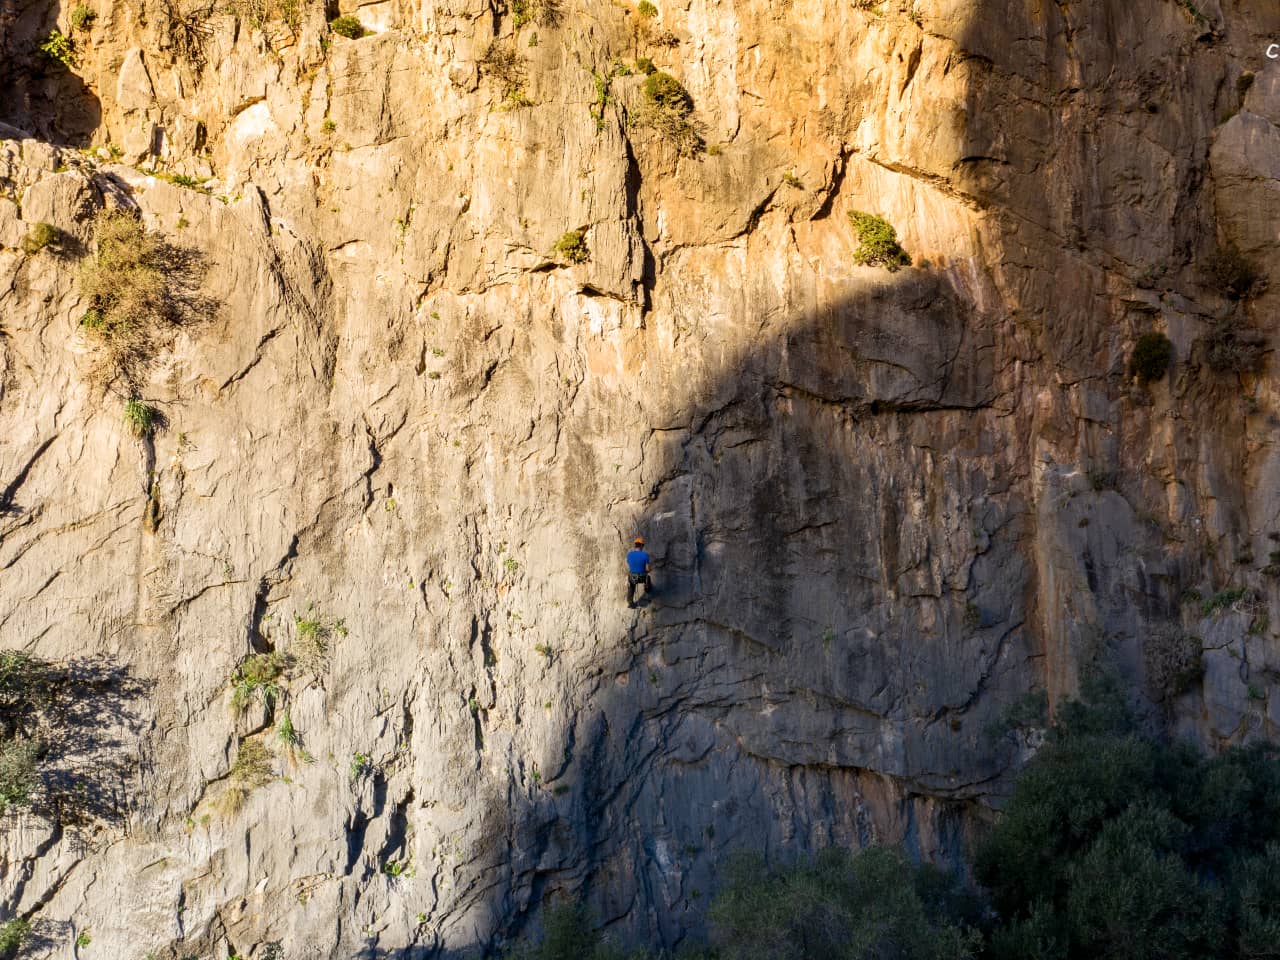 3 day rock climbing agiofaraggo Crete, agiofarago crete climbing, activities crete, south heraklion activity climbing, multi day climbing activity crete, best things to do crete, the crete you are looking for